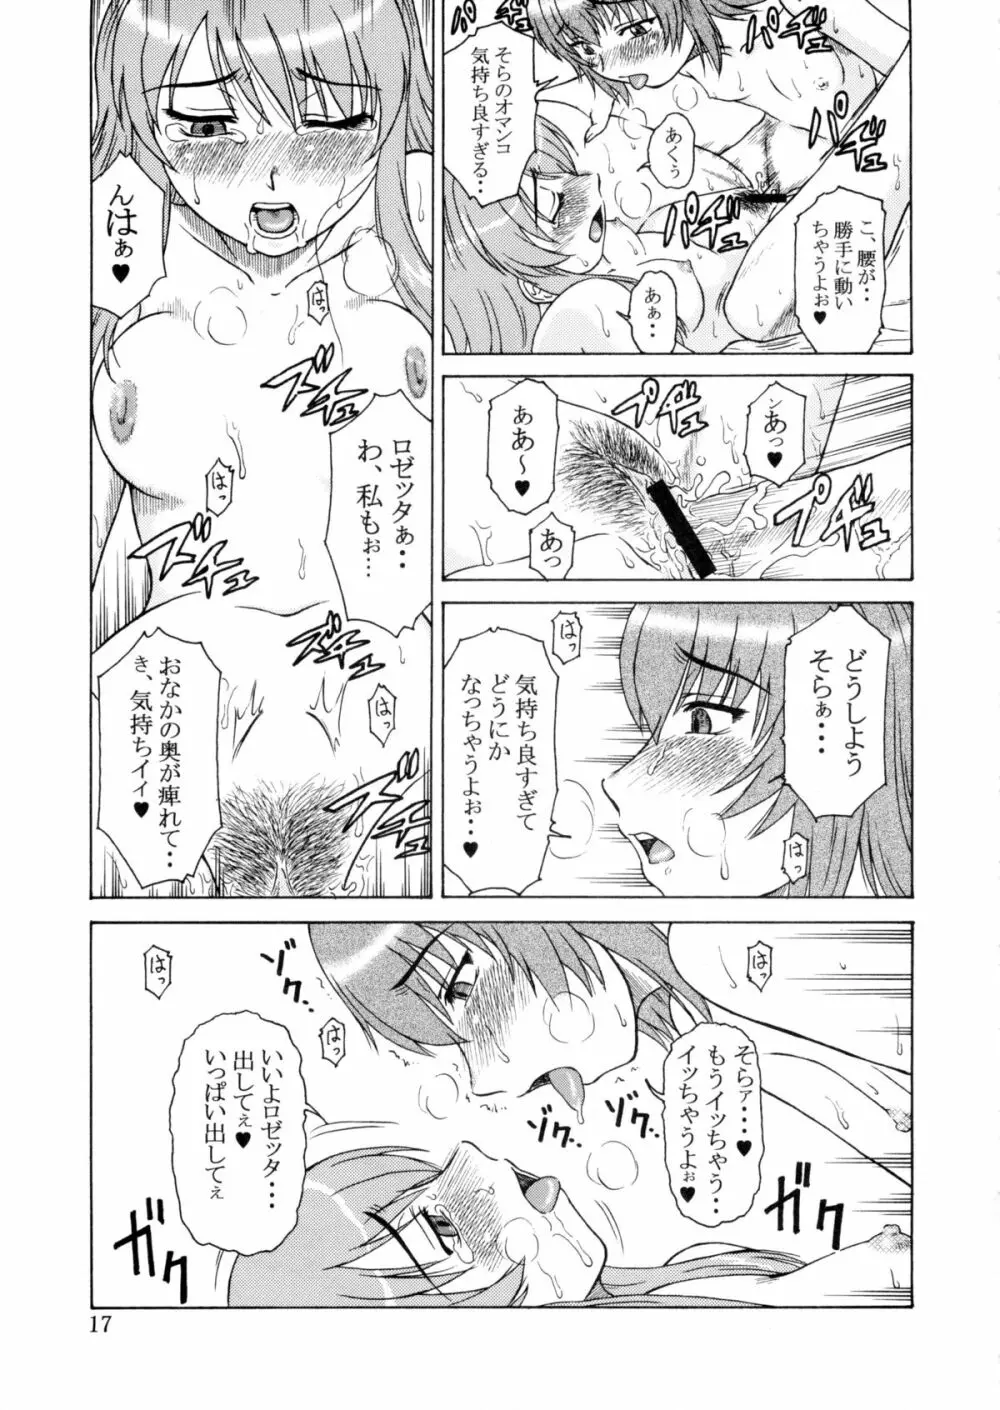 追放覚悟 Kakugo Ver.9.0 - page17